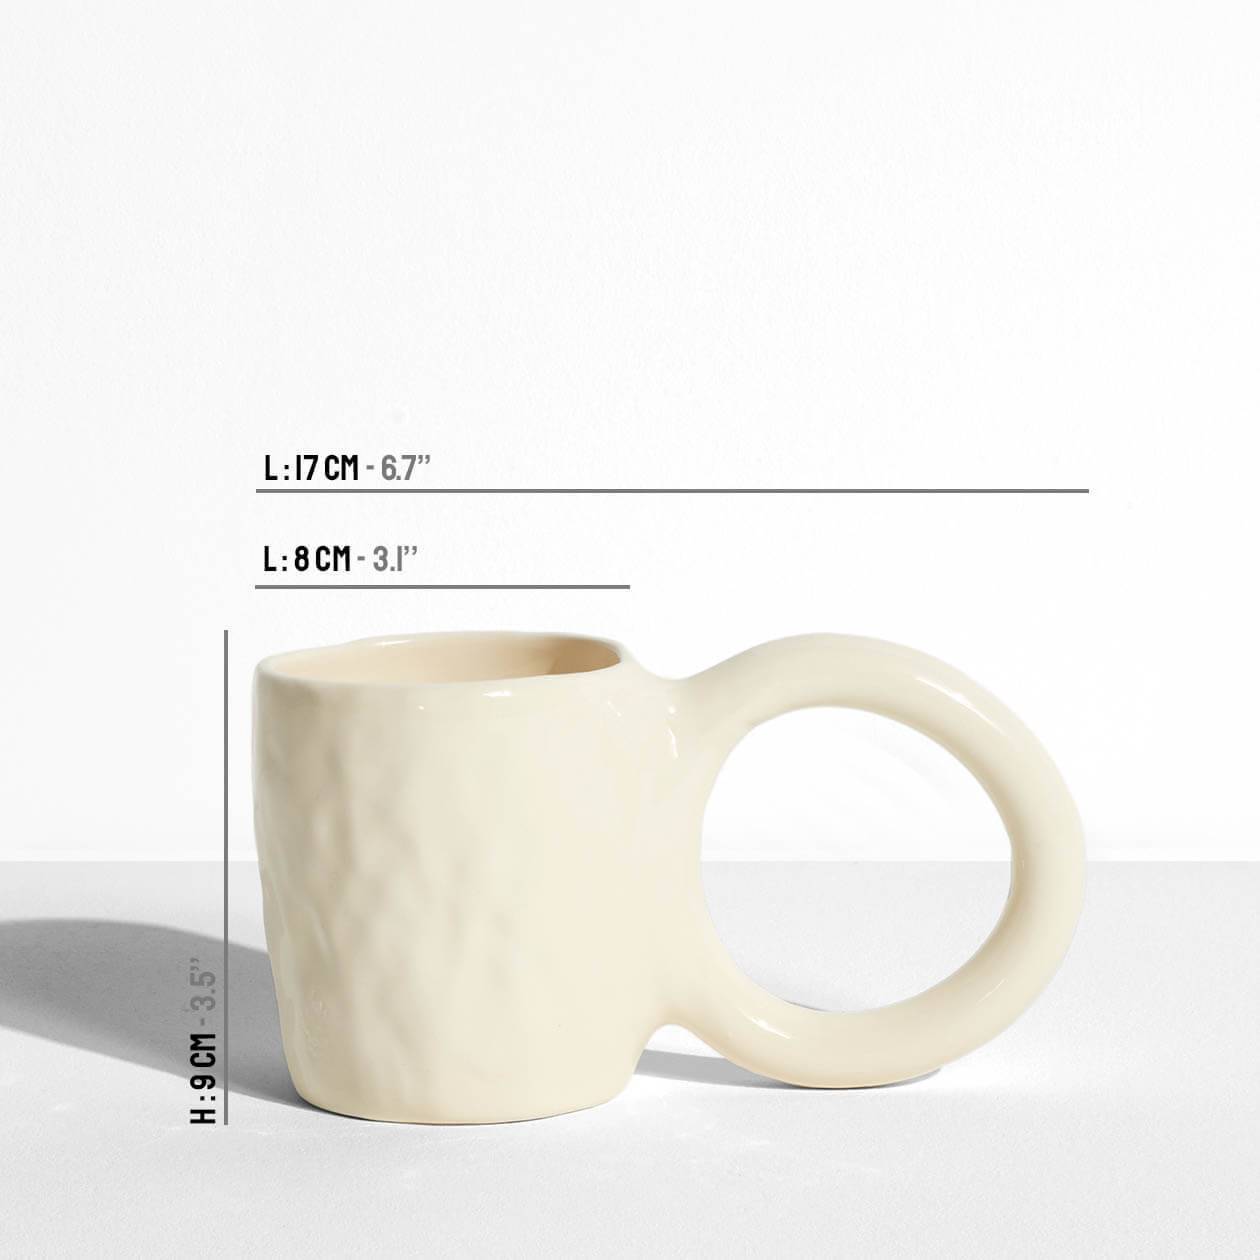 Donut Mug - Vanilla - Pia Chevalier for Petite Friture - dimensions